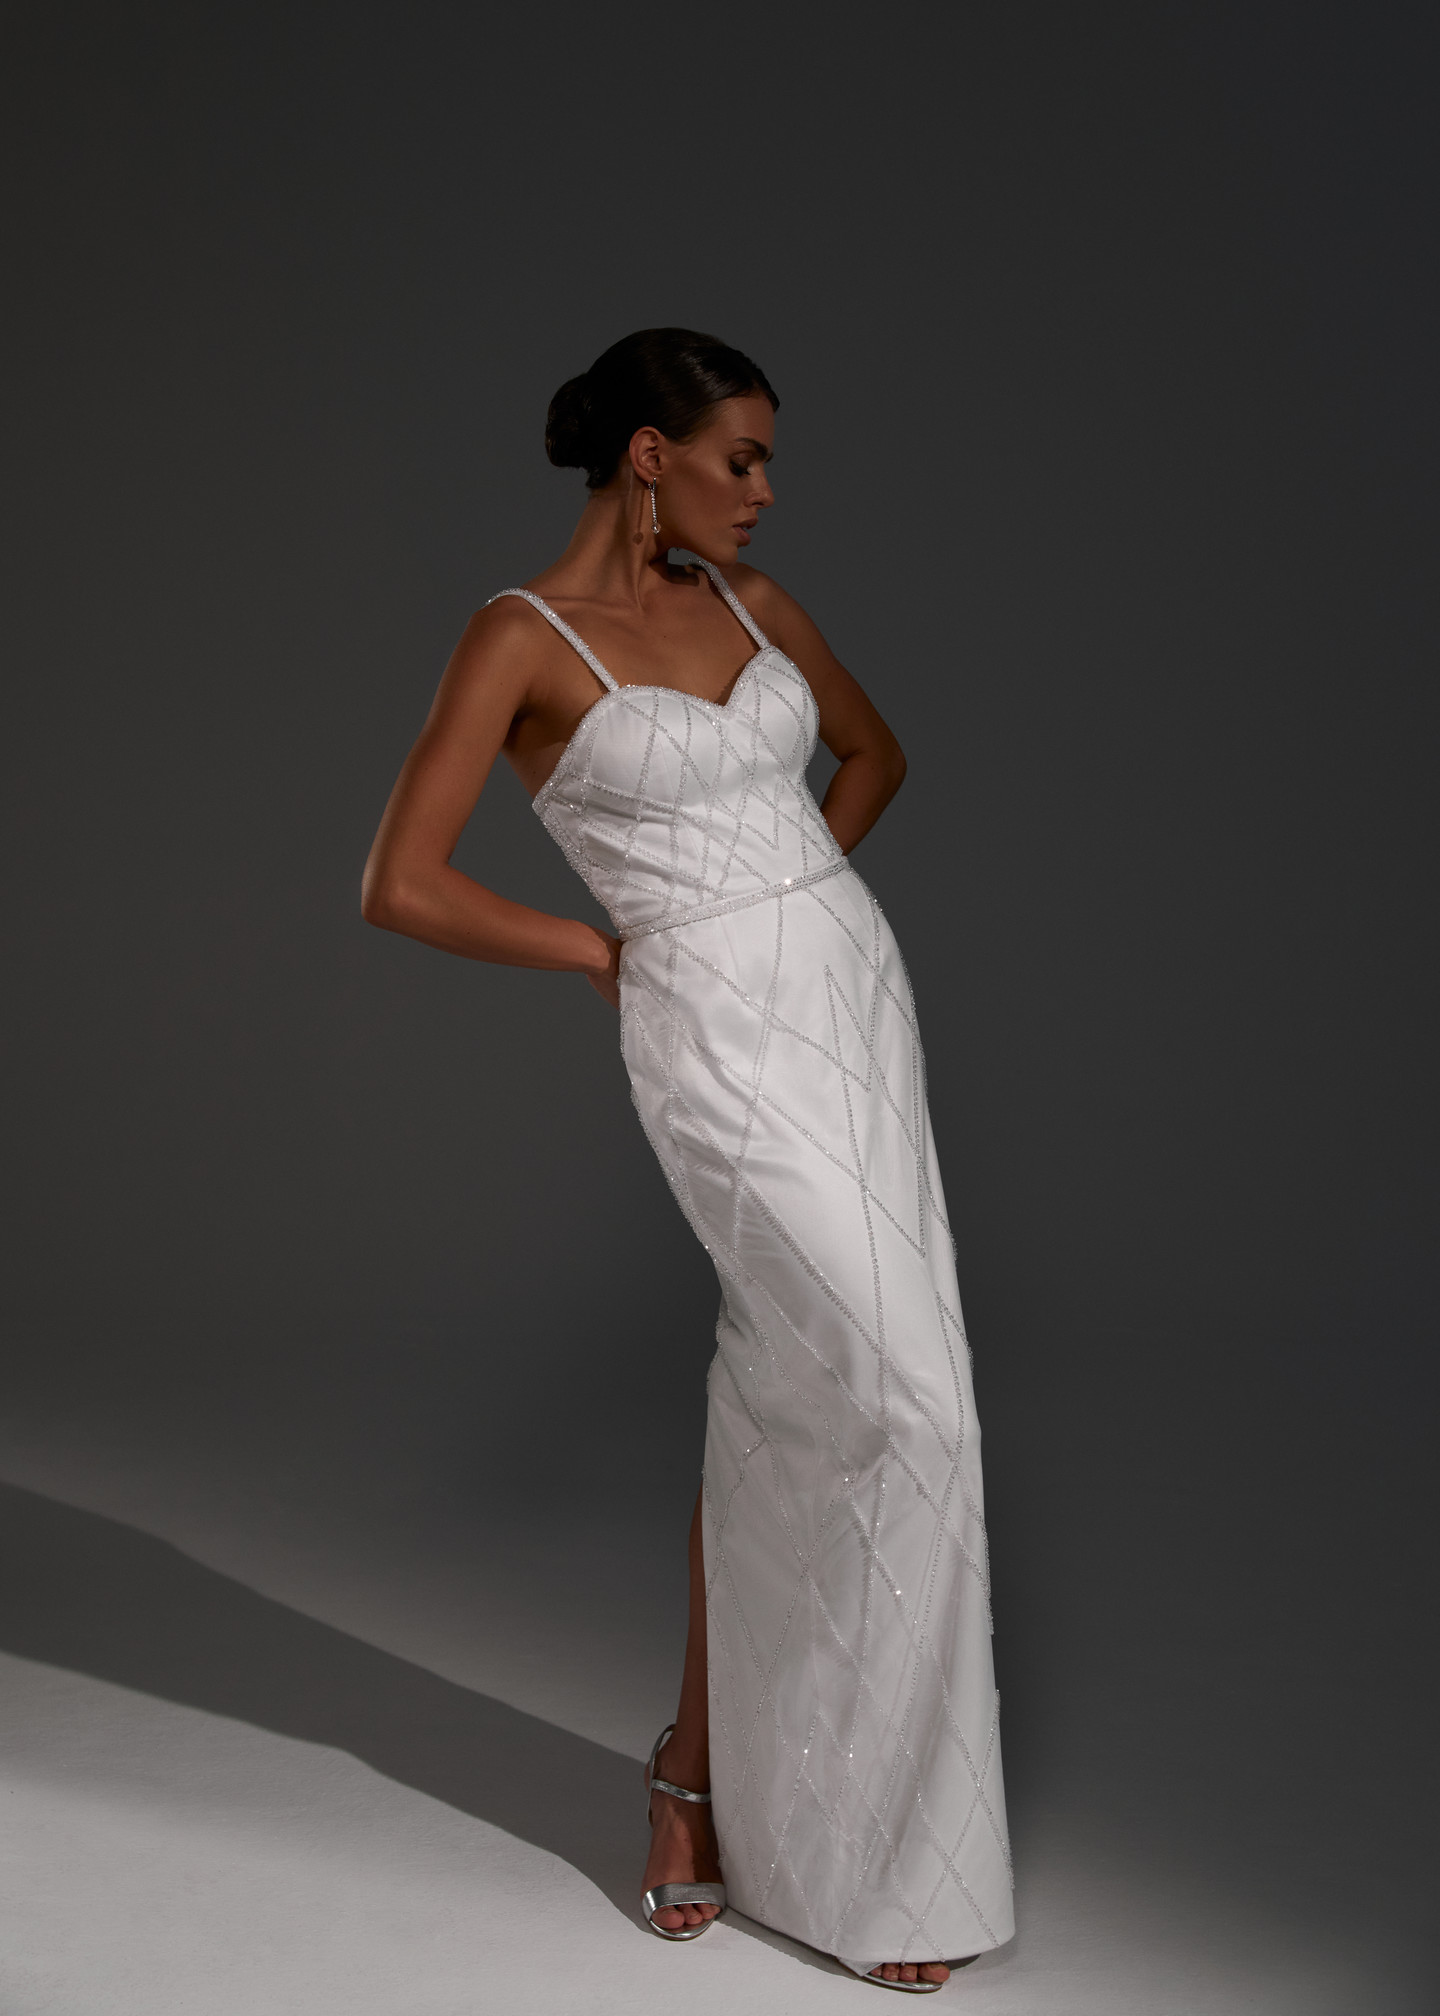 Chiara dress, 2021, couture, dress, bridal, off-white, embroidery, sheath silhouette